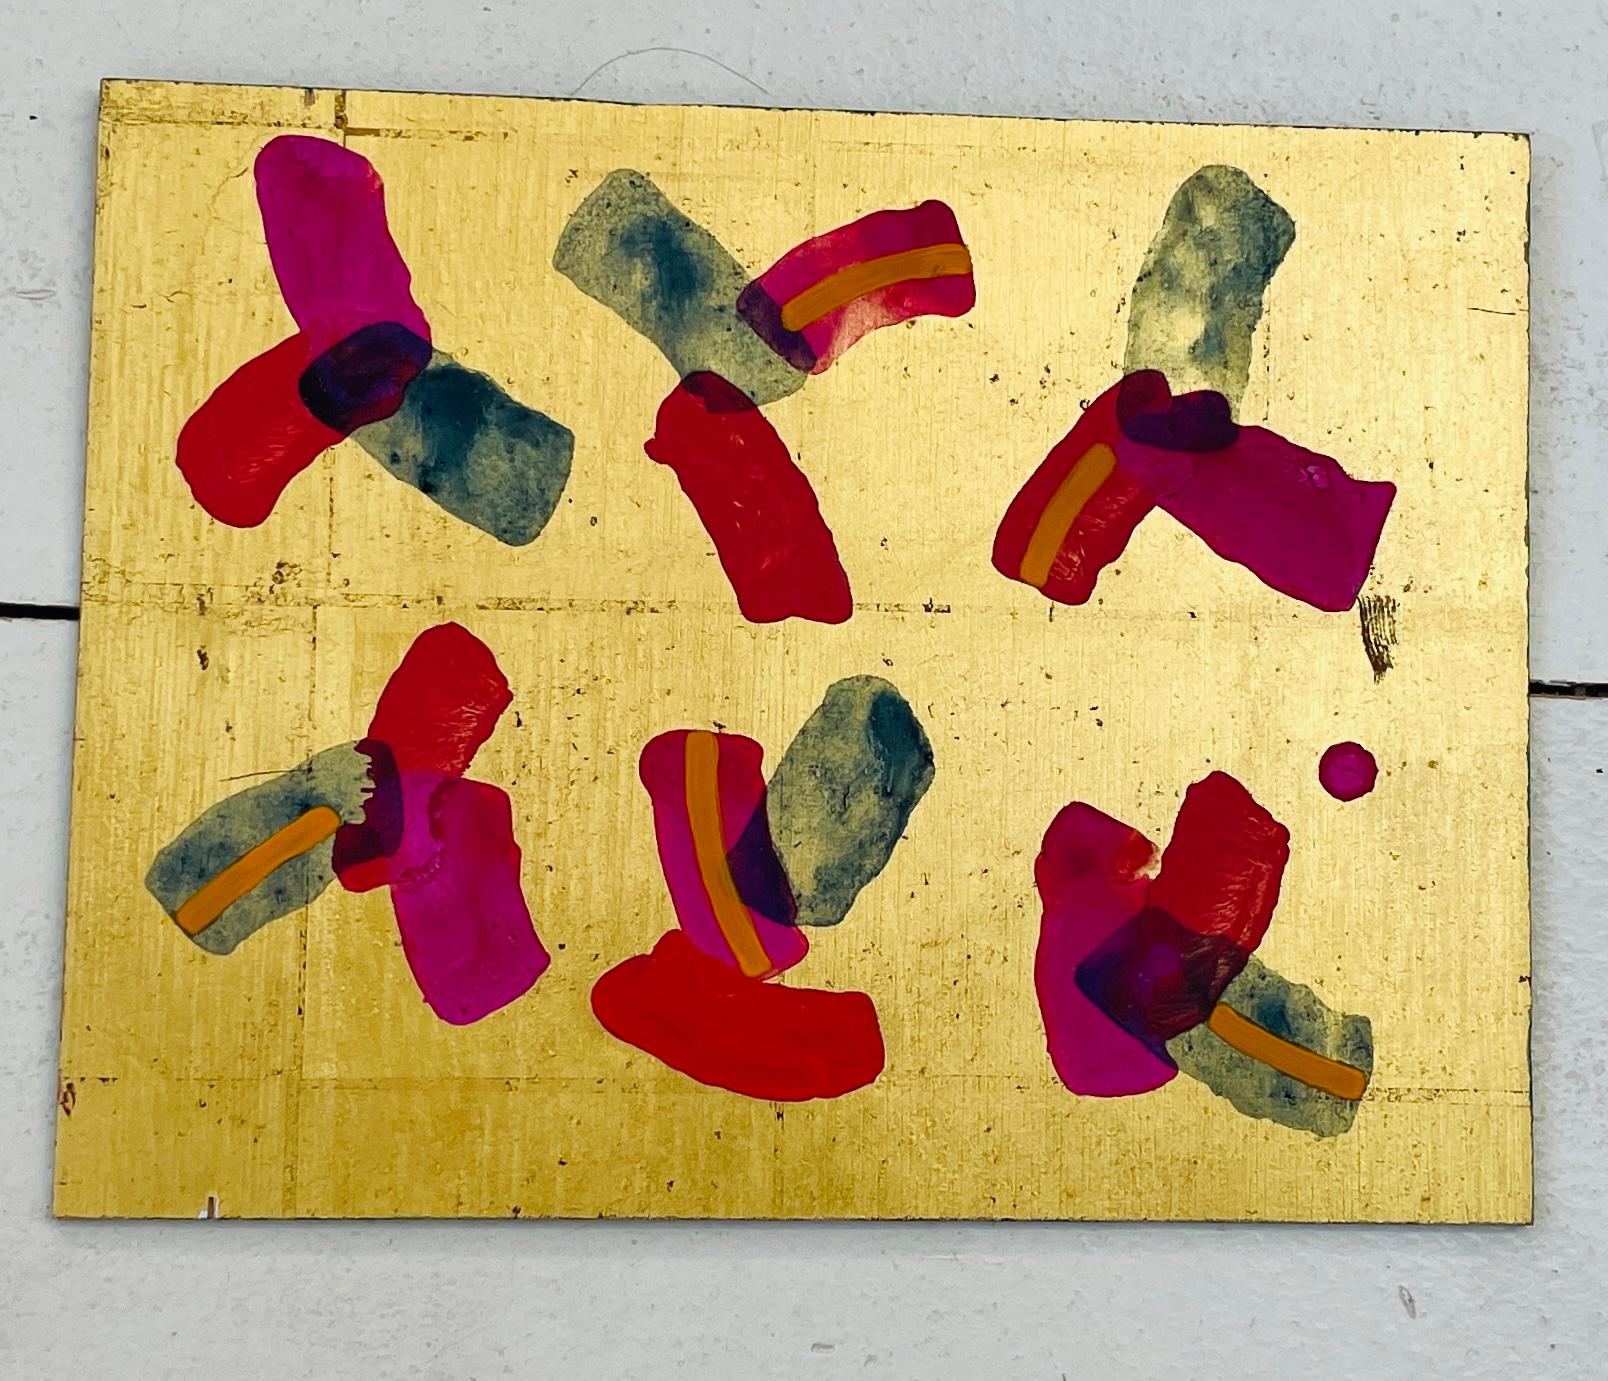 Anthony Benjamin, 'Intitled', acrylic and gouache on gold leaf board, image size 8